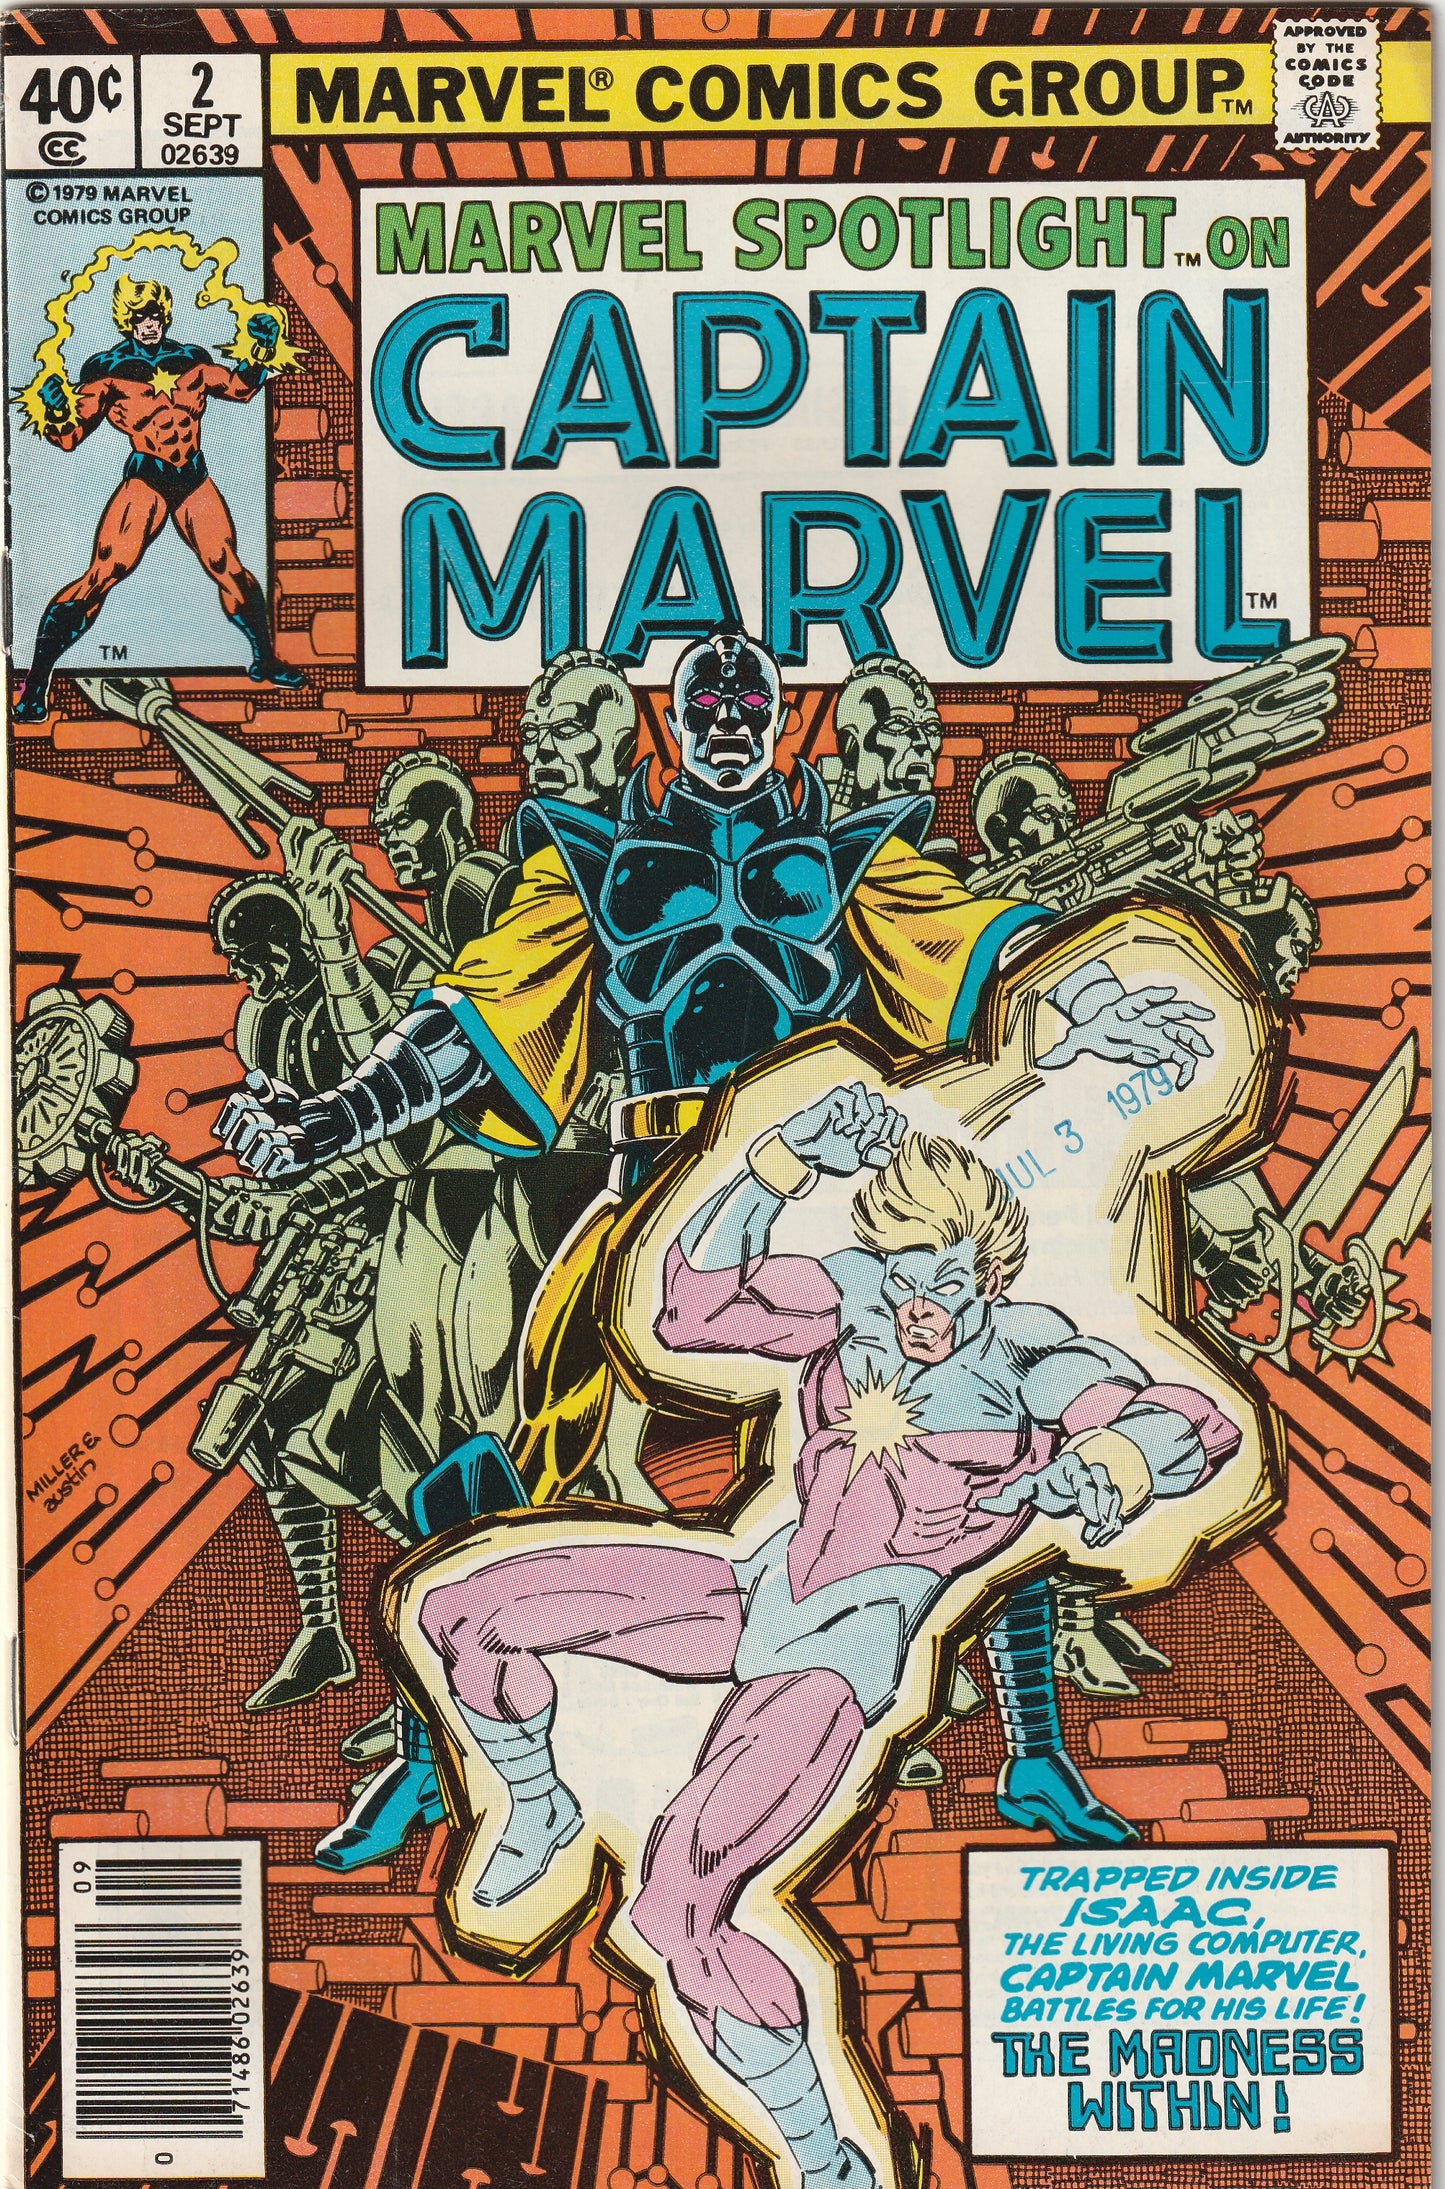 Marvel Spotlight Volume 2 #2 (1979) Captain Marvel